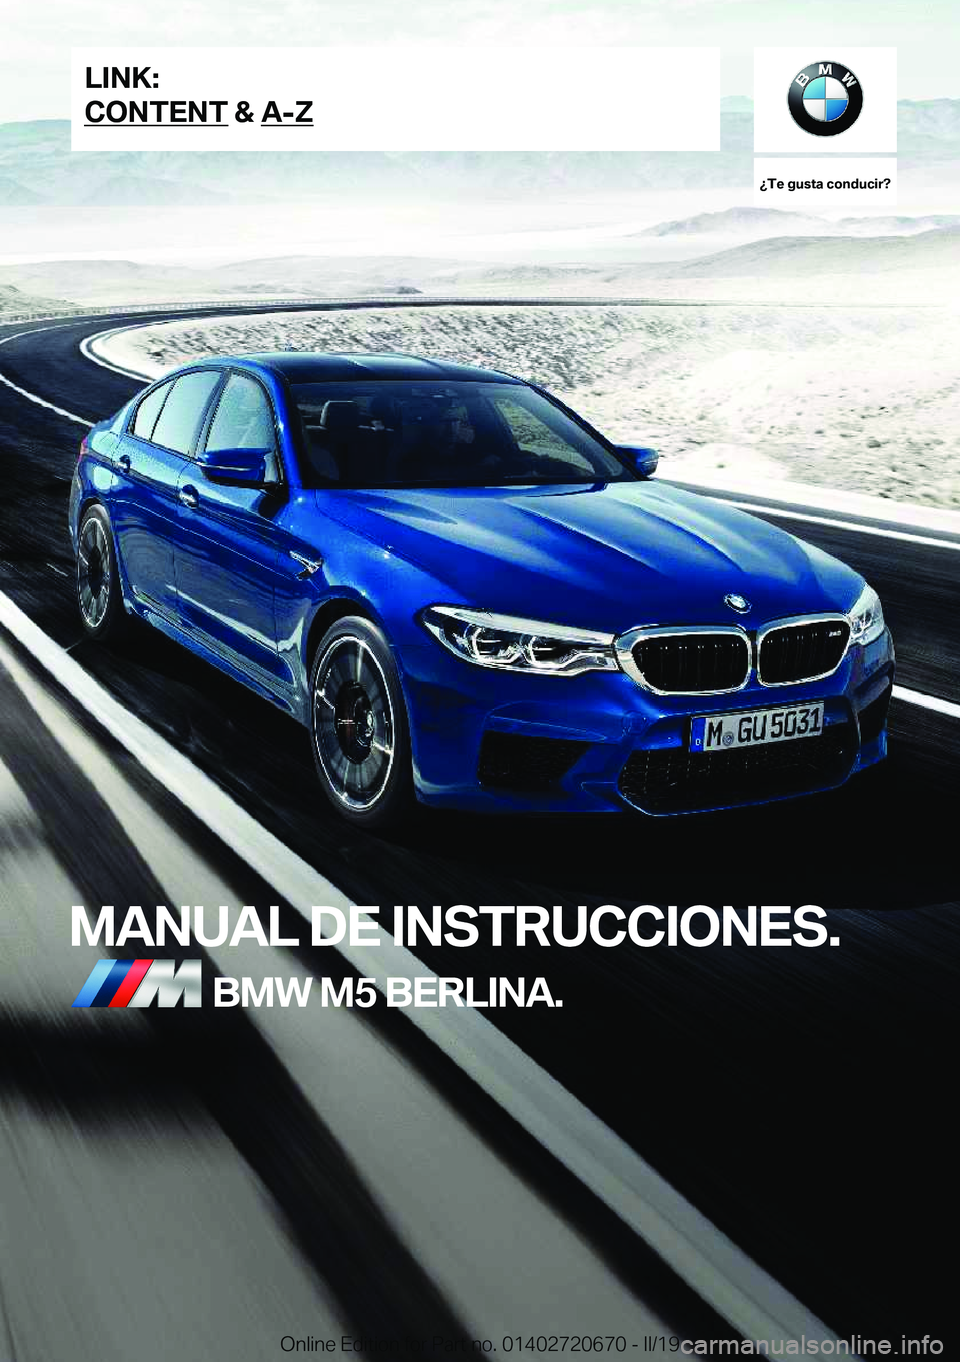 BMW M5 2019  Manuales de Empleo (in Spanish) ��T�e��g�u�s�t�a��c�o�n�d�u�c�i�r� 
�M�A�N�U�A�L��D�E��I�N�S�T�R�U�C�C�I�O�N�E�S�.�B�M�W��M�5��B�E�R�L�I�N�A�.�L�I�N�K�:
�C�O�N�T�E�N�T��&��A�-�Z�O�n�l�i�n�e��E�d�i�t�i�o�n��f�o�r��P�a�r�t